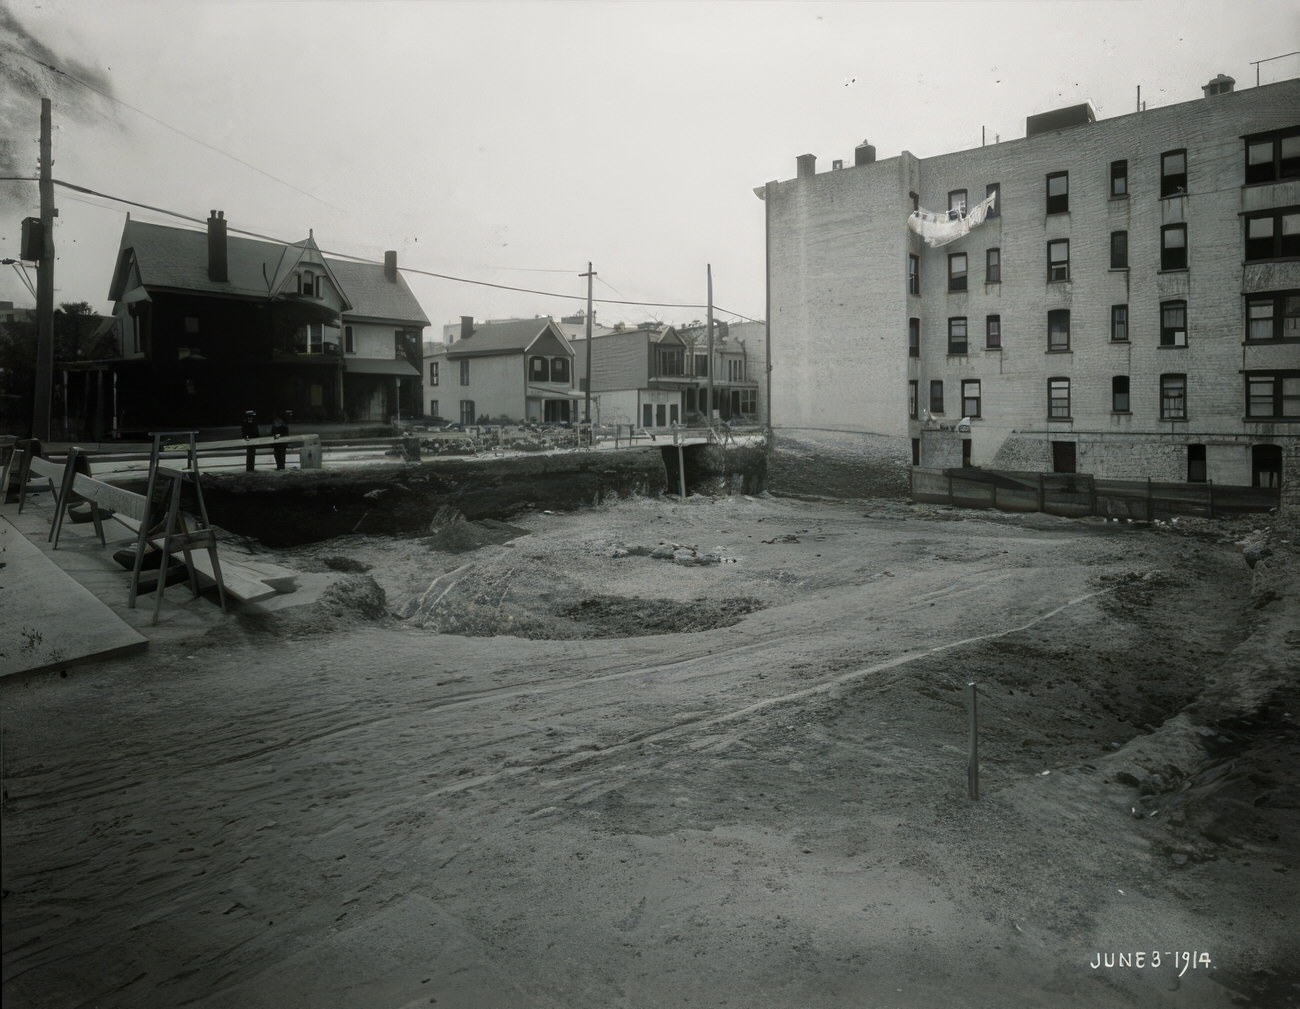 Parochial School Under Construction At 183Rd Street And Washington Avenue, 1914.